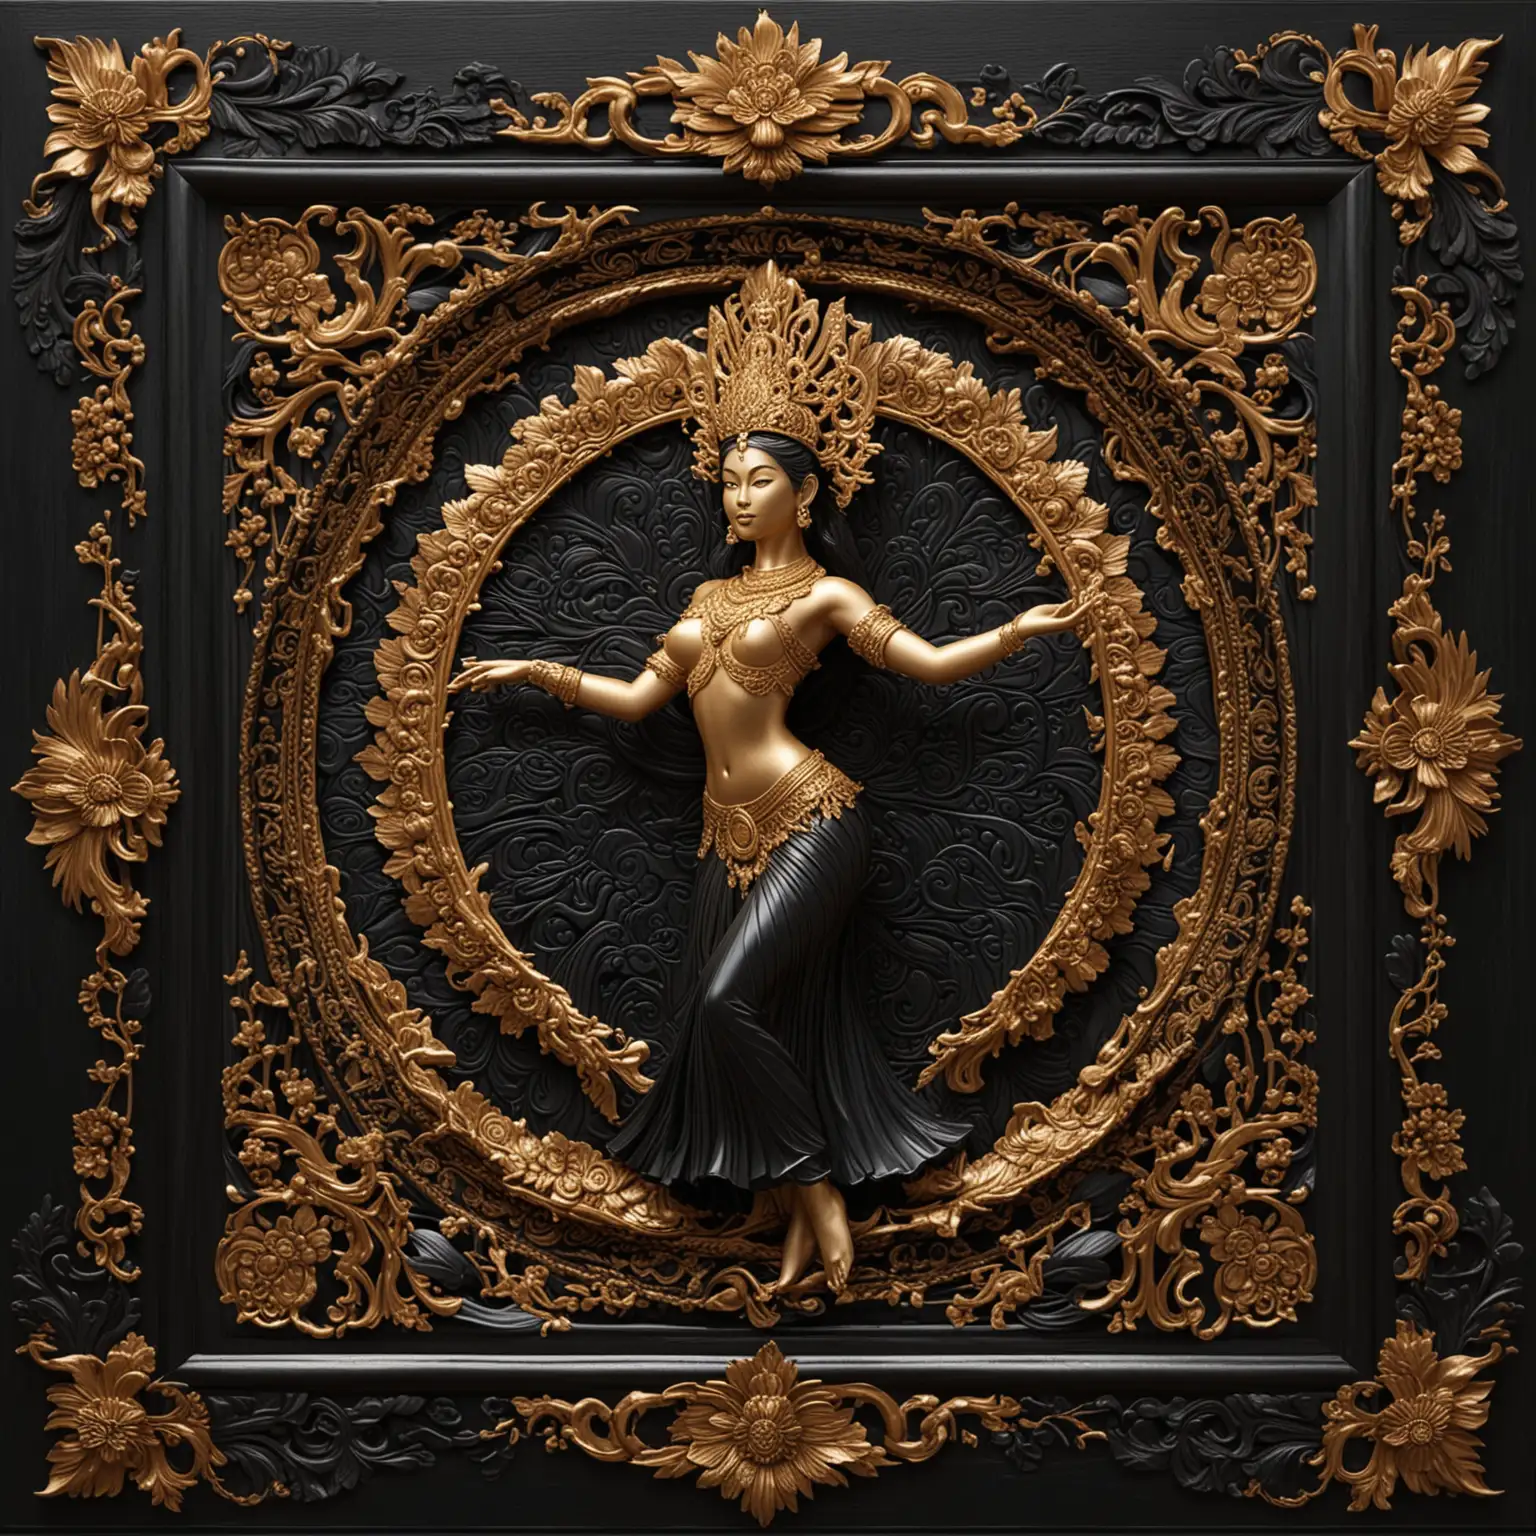 Thai-Dancer-Carved-Wood-Artwork-with-Gold-Headdress-on-Black-Lacquered-Frame